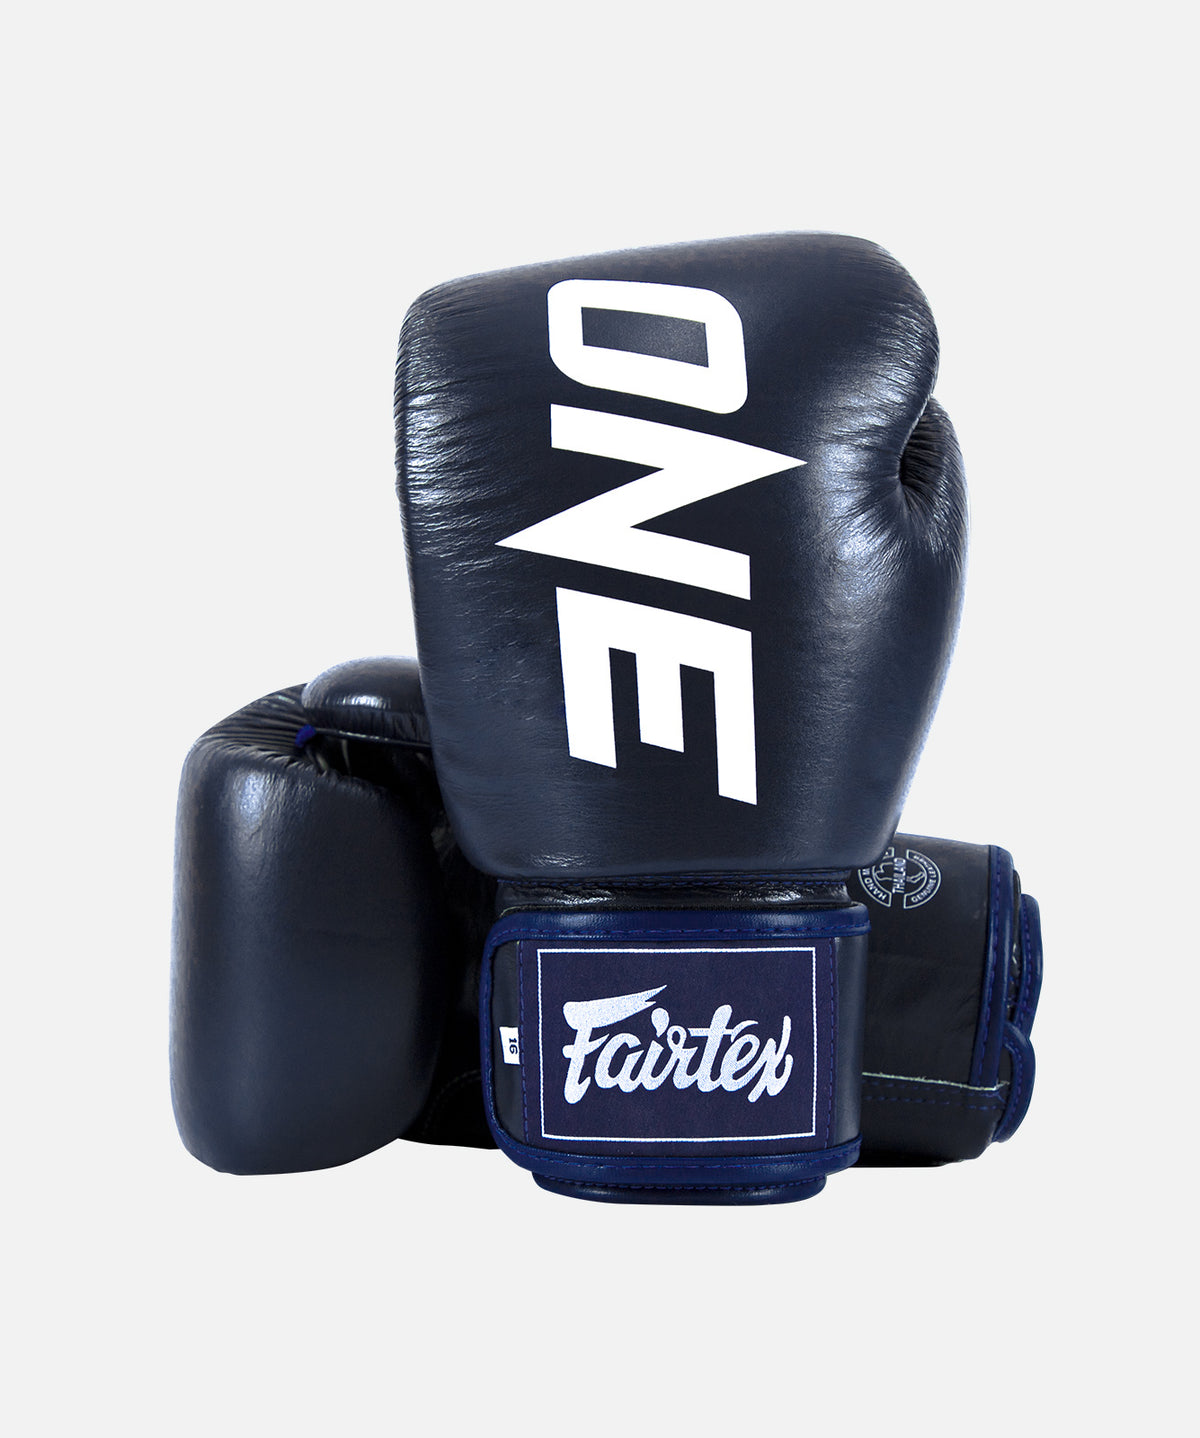 buy boxing gloves online